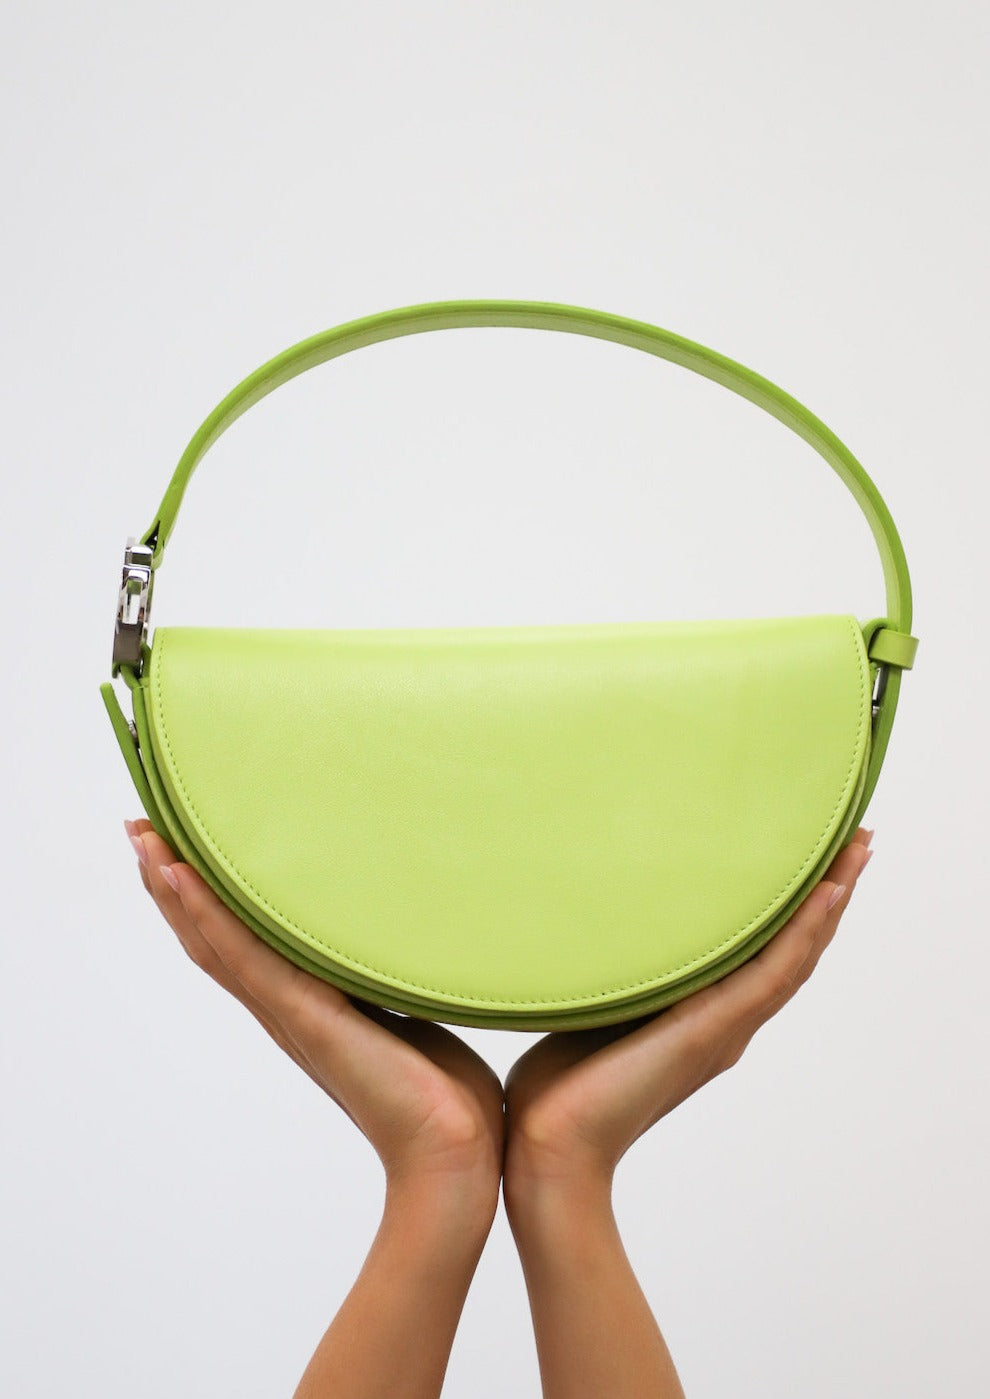 Dooz pisces lime green italian leather handbag circular shape handmade in los angeles usa